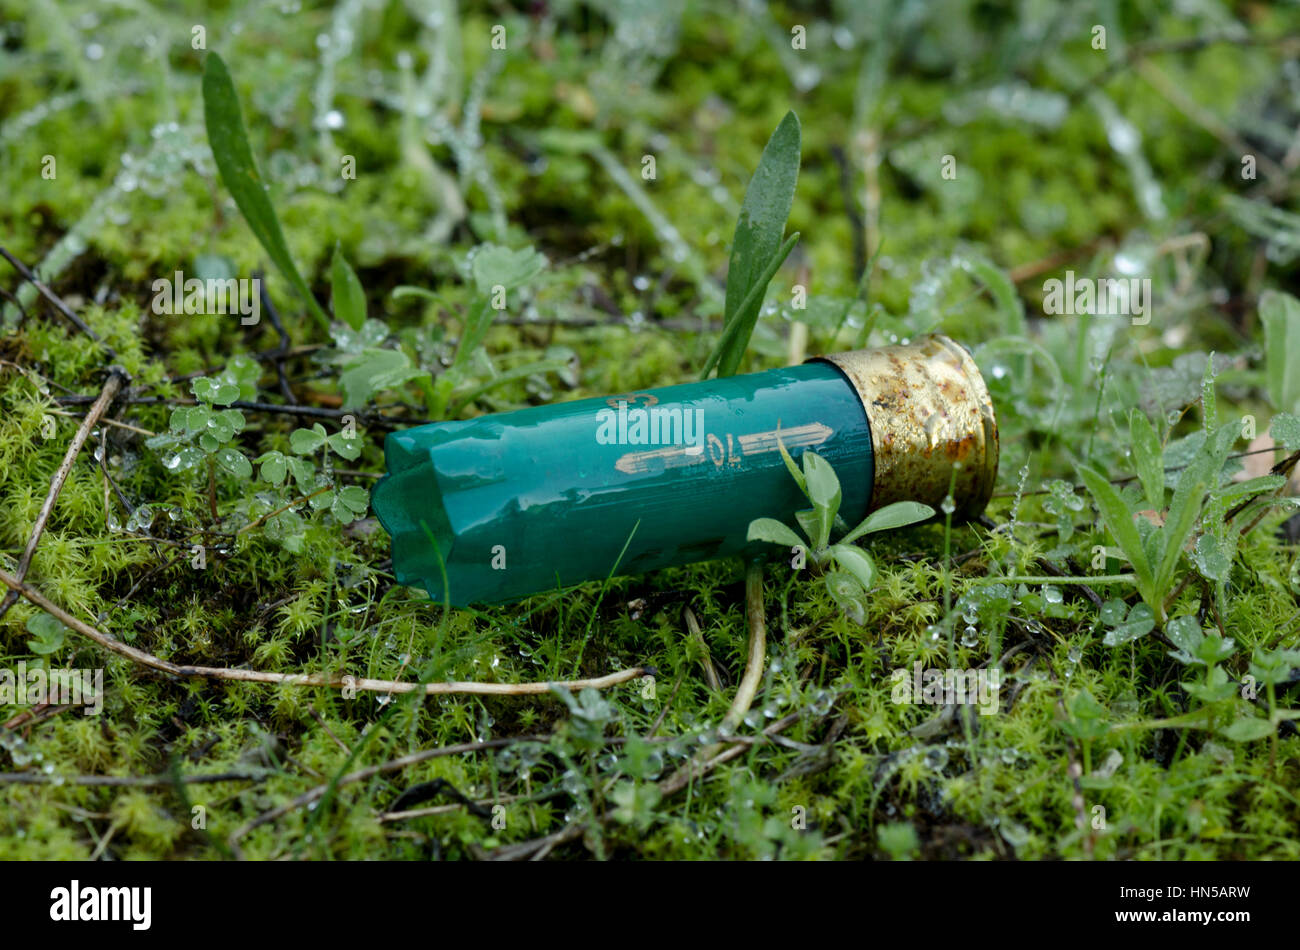 Svuotare i serbatoi fucile cartuccia di munizioni lasciati da cacciatori in campagna, Spagna Foto Stock